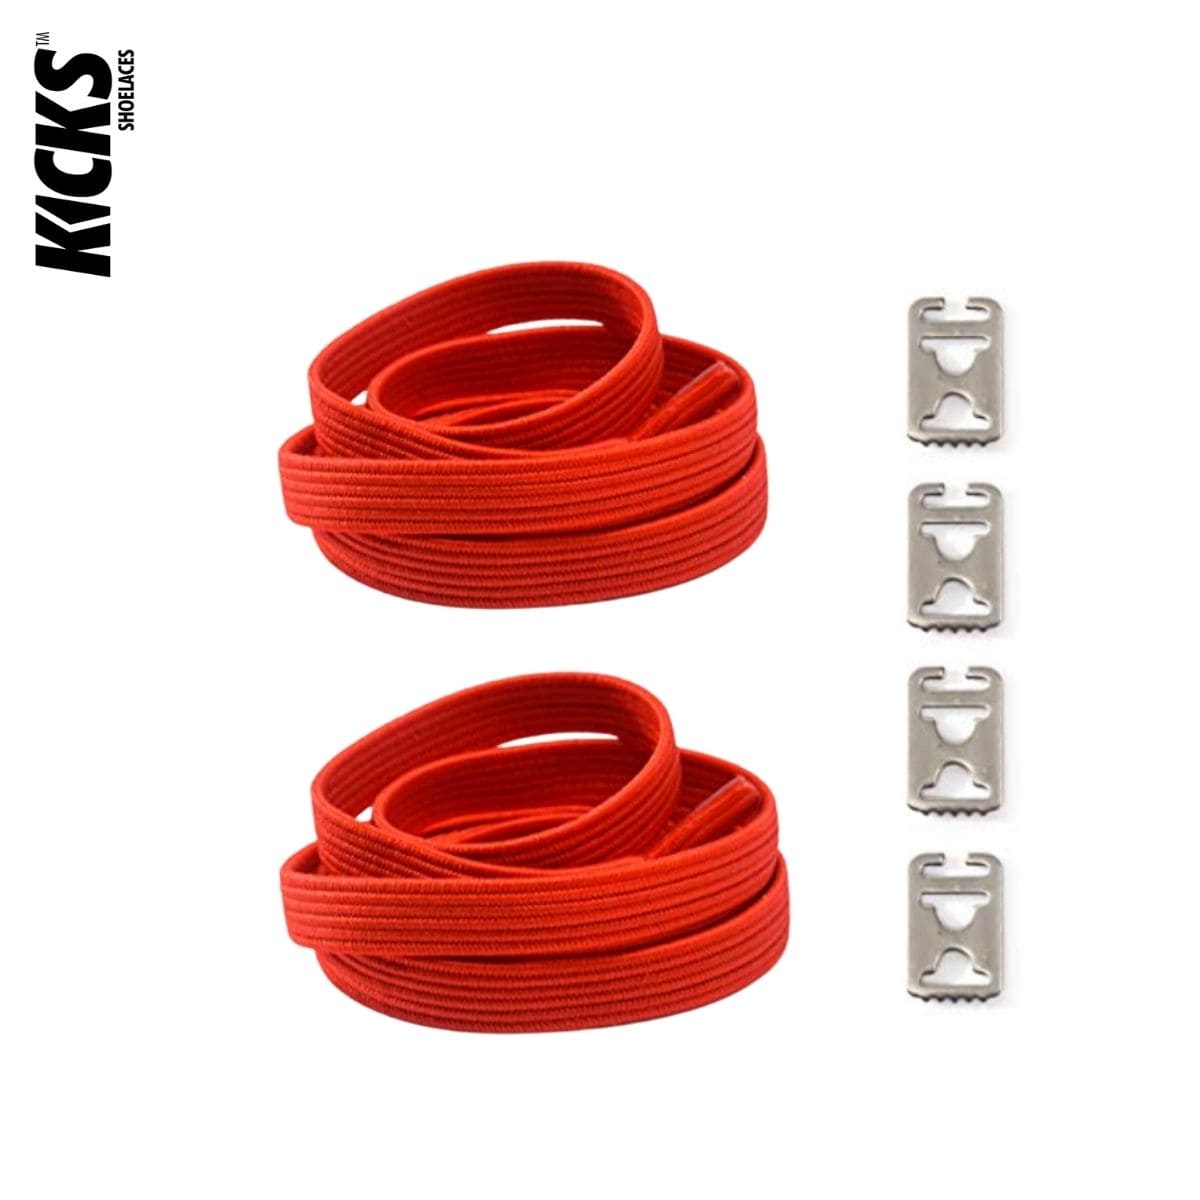 Replacement for Shoe Laces Red No-Tie Shoelaces - Kicks Shoelaces